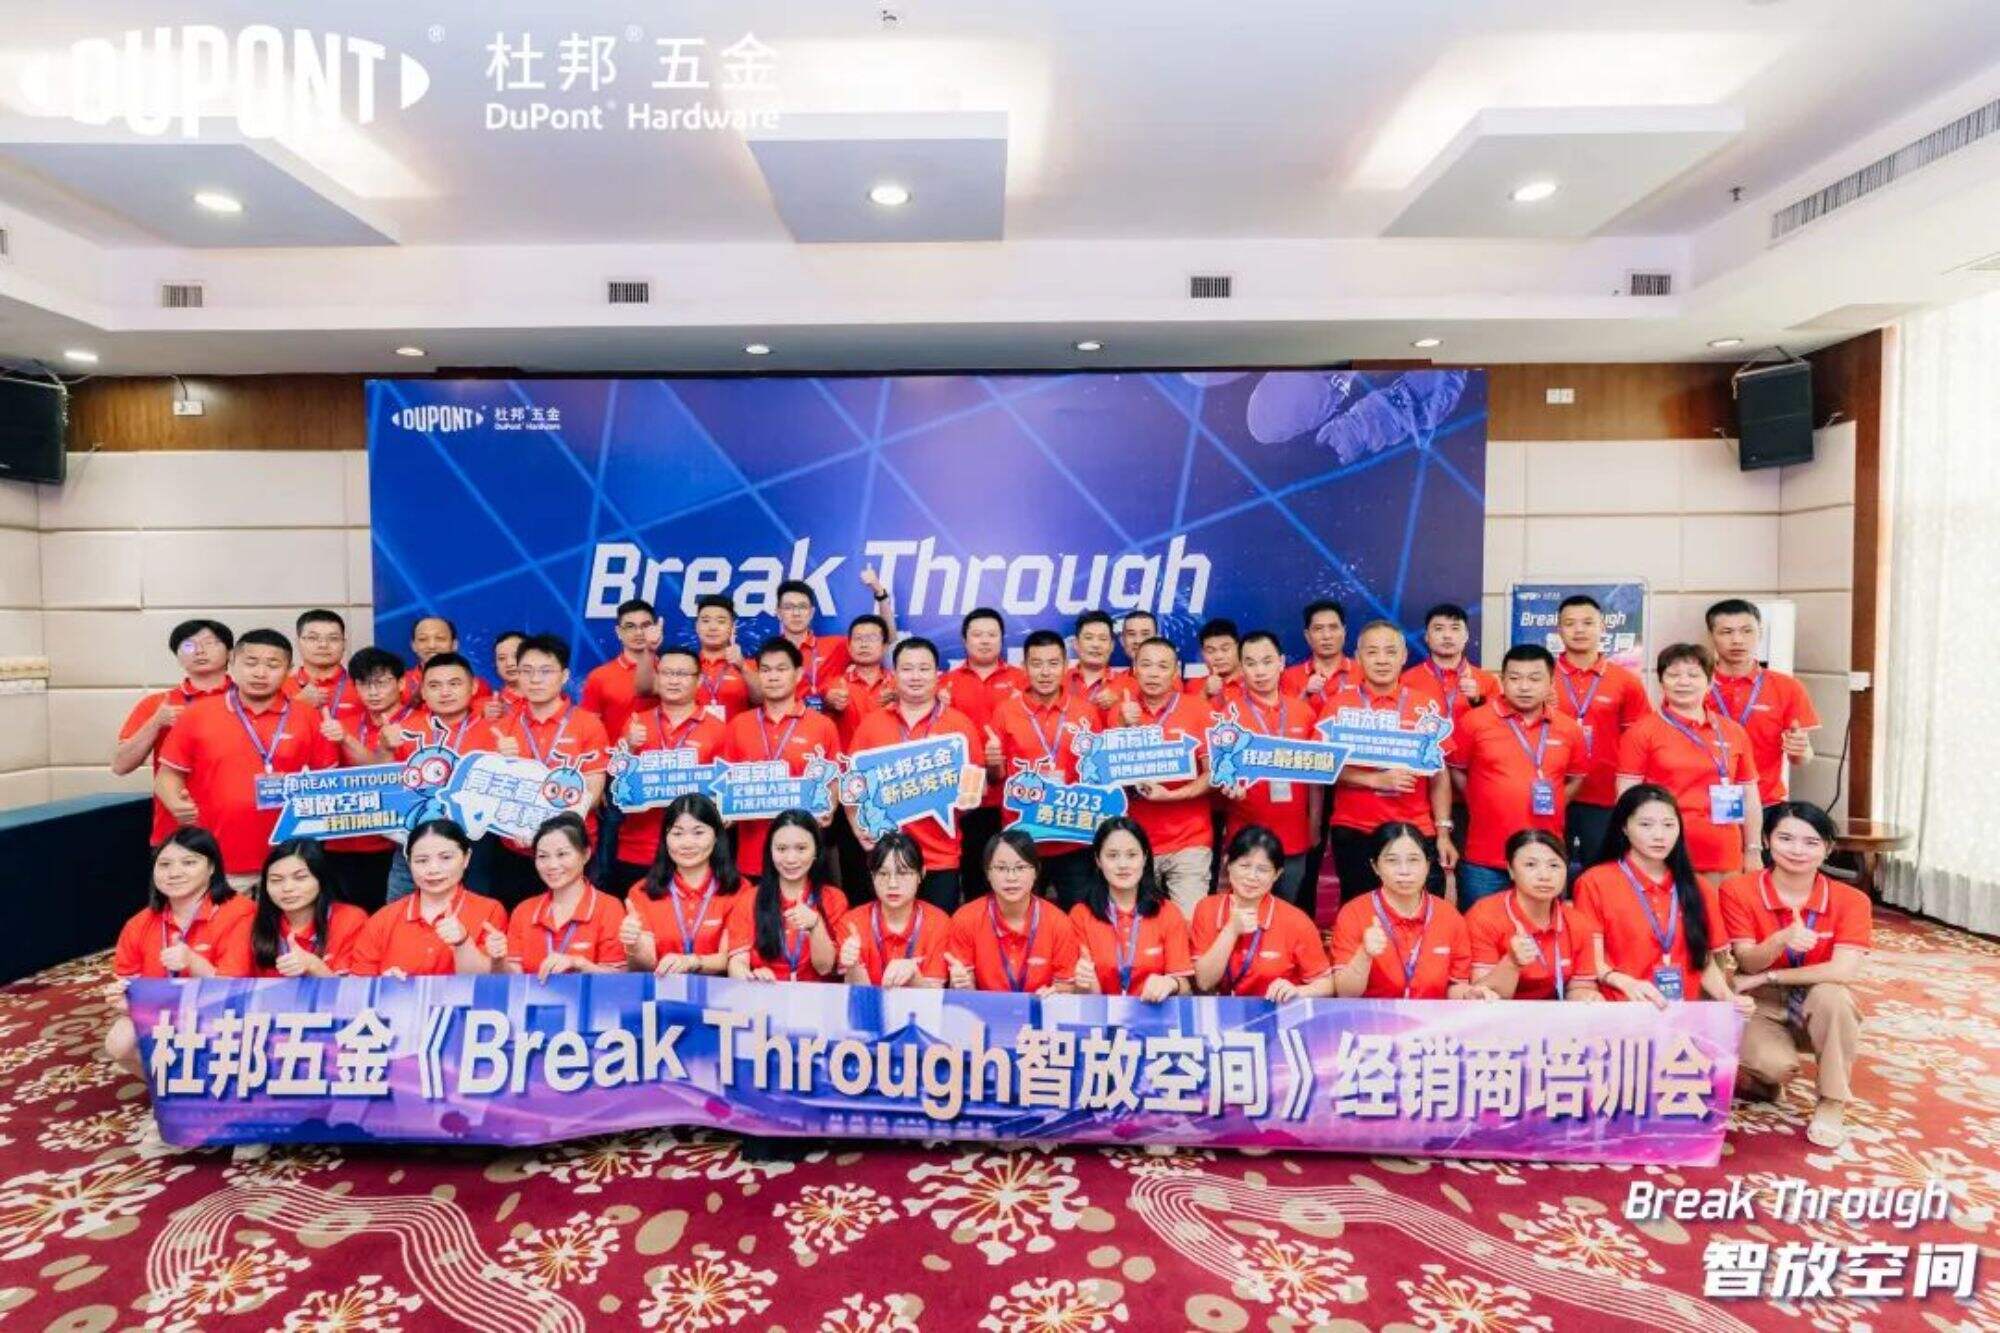 Break Through Smart Release Space | DuPont Hardware Dealer Training Meeting ay Tamang-tama!